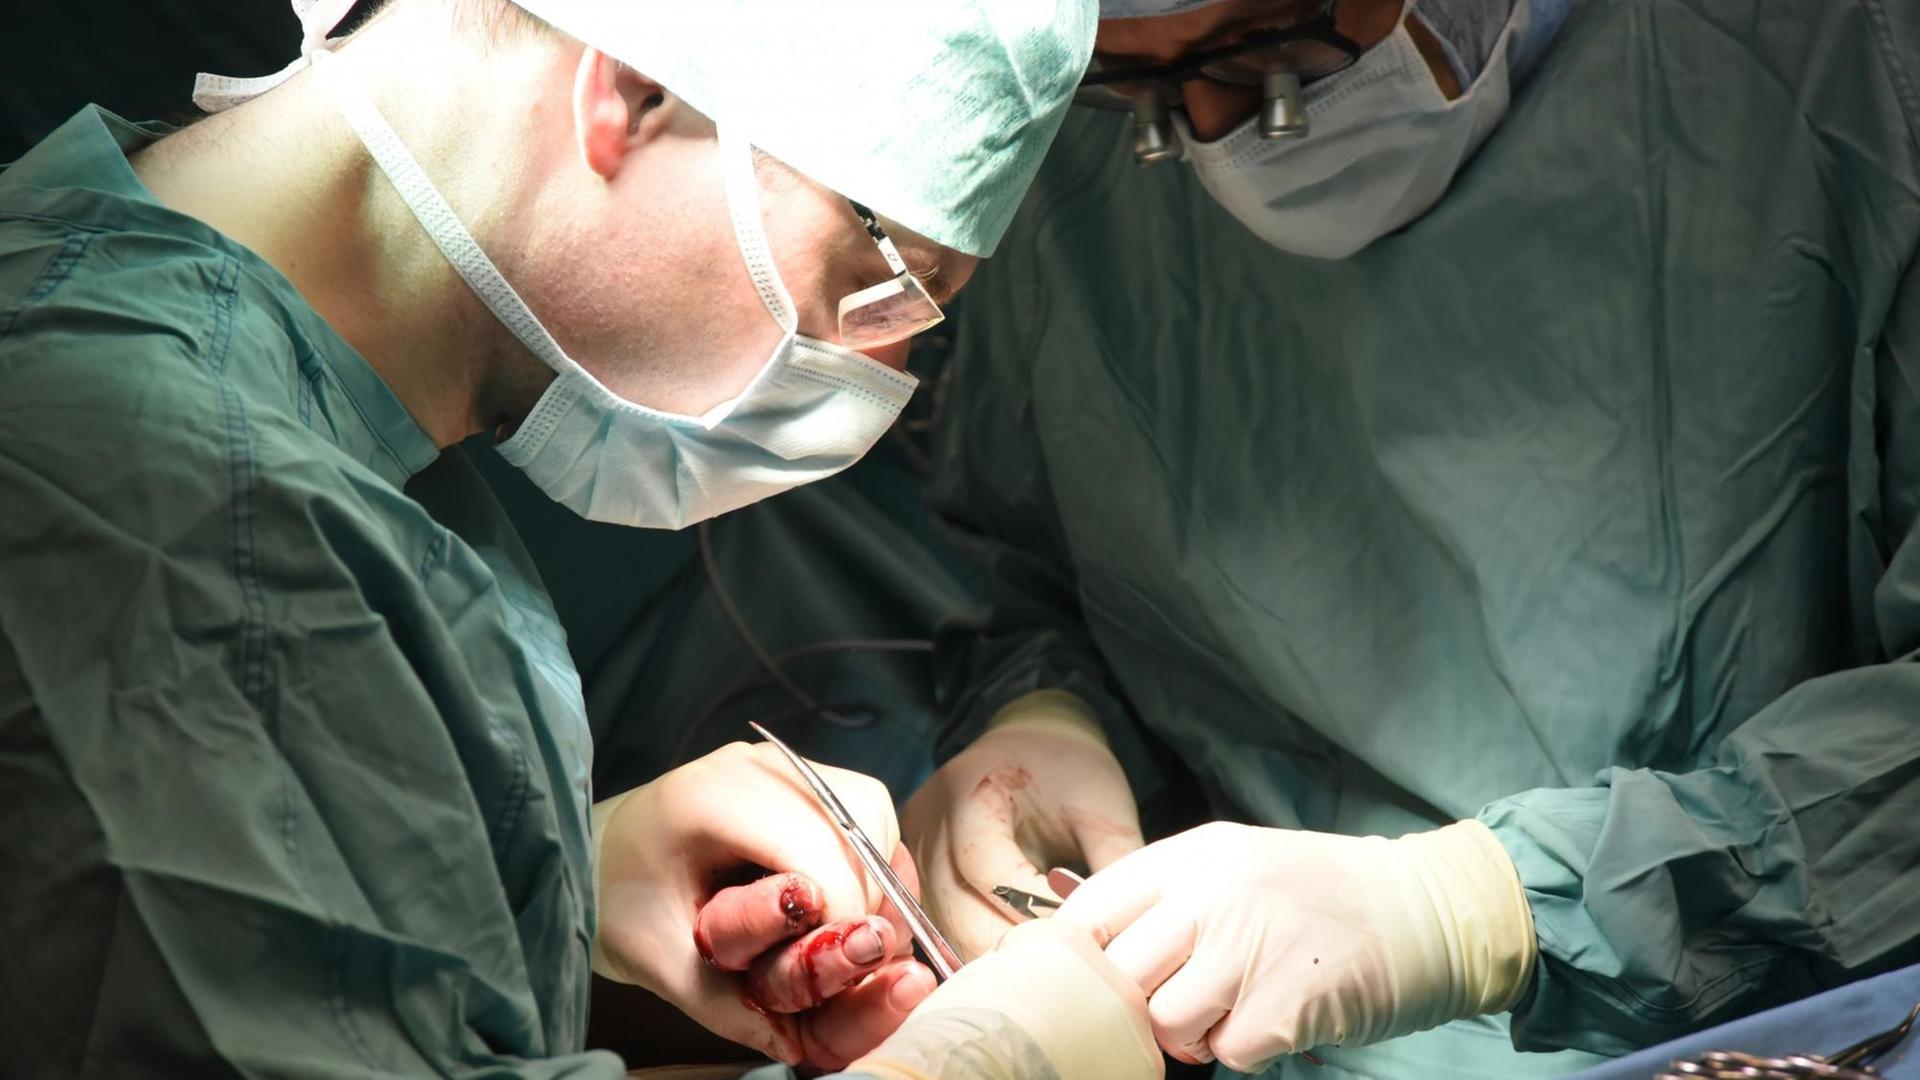 Handchirurgen am Magdeburger Universitätsklinikum operieren